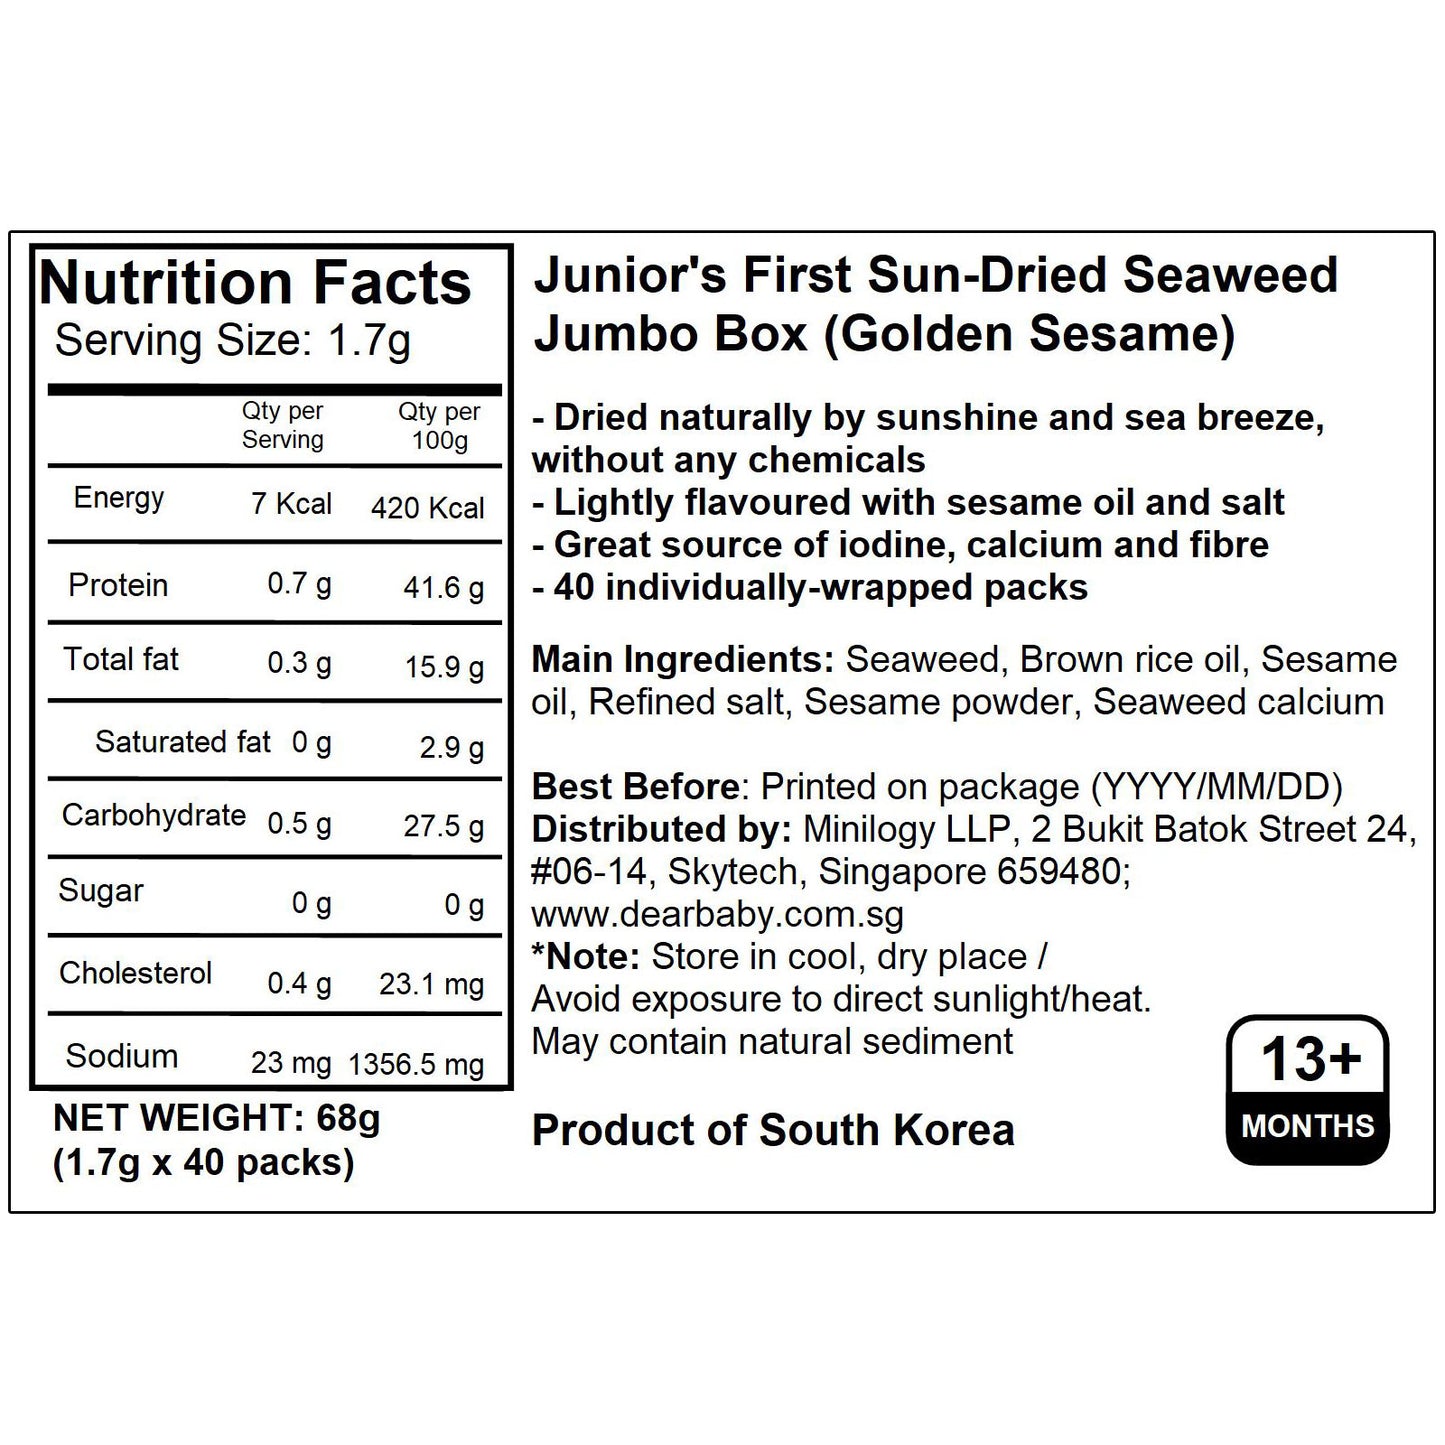 BeBecook - Junior's First Sun-Dried Seaweed (Golden Sesame) 20 x 1.7g